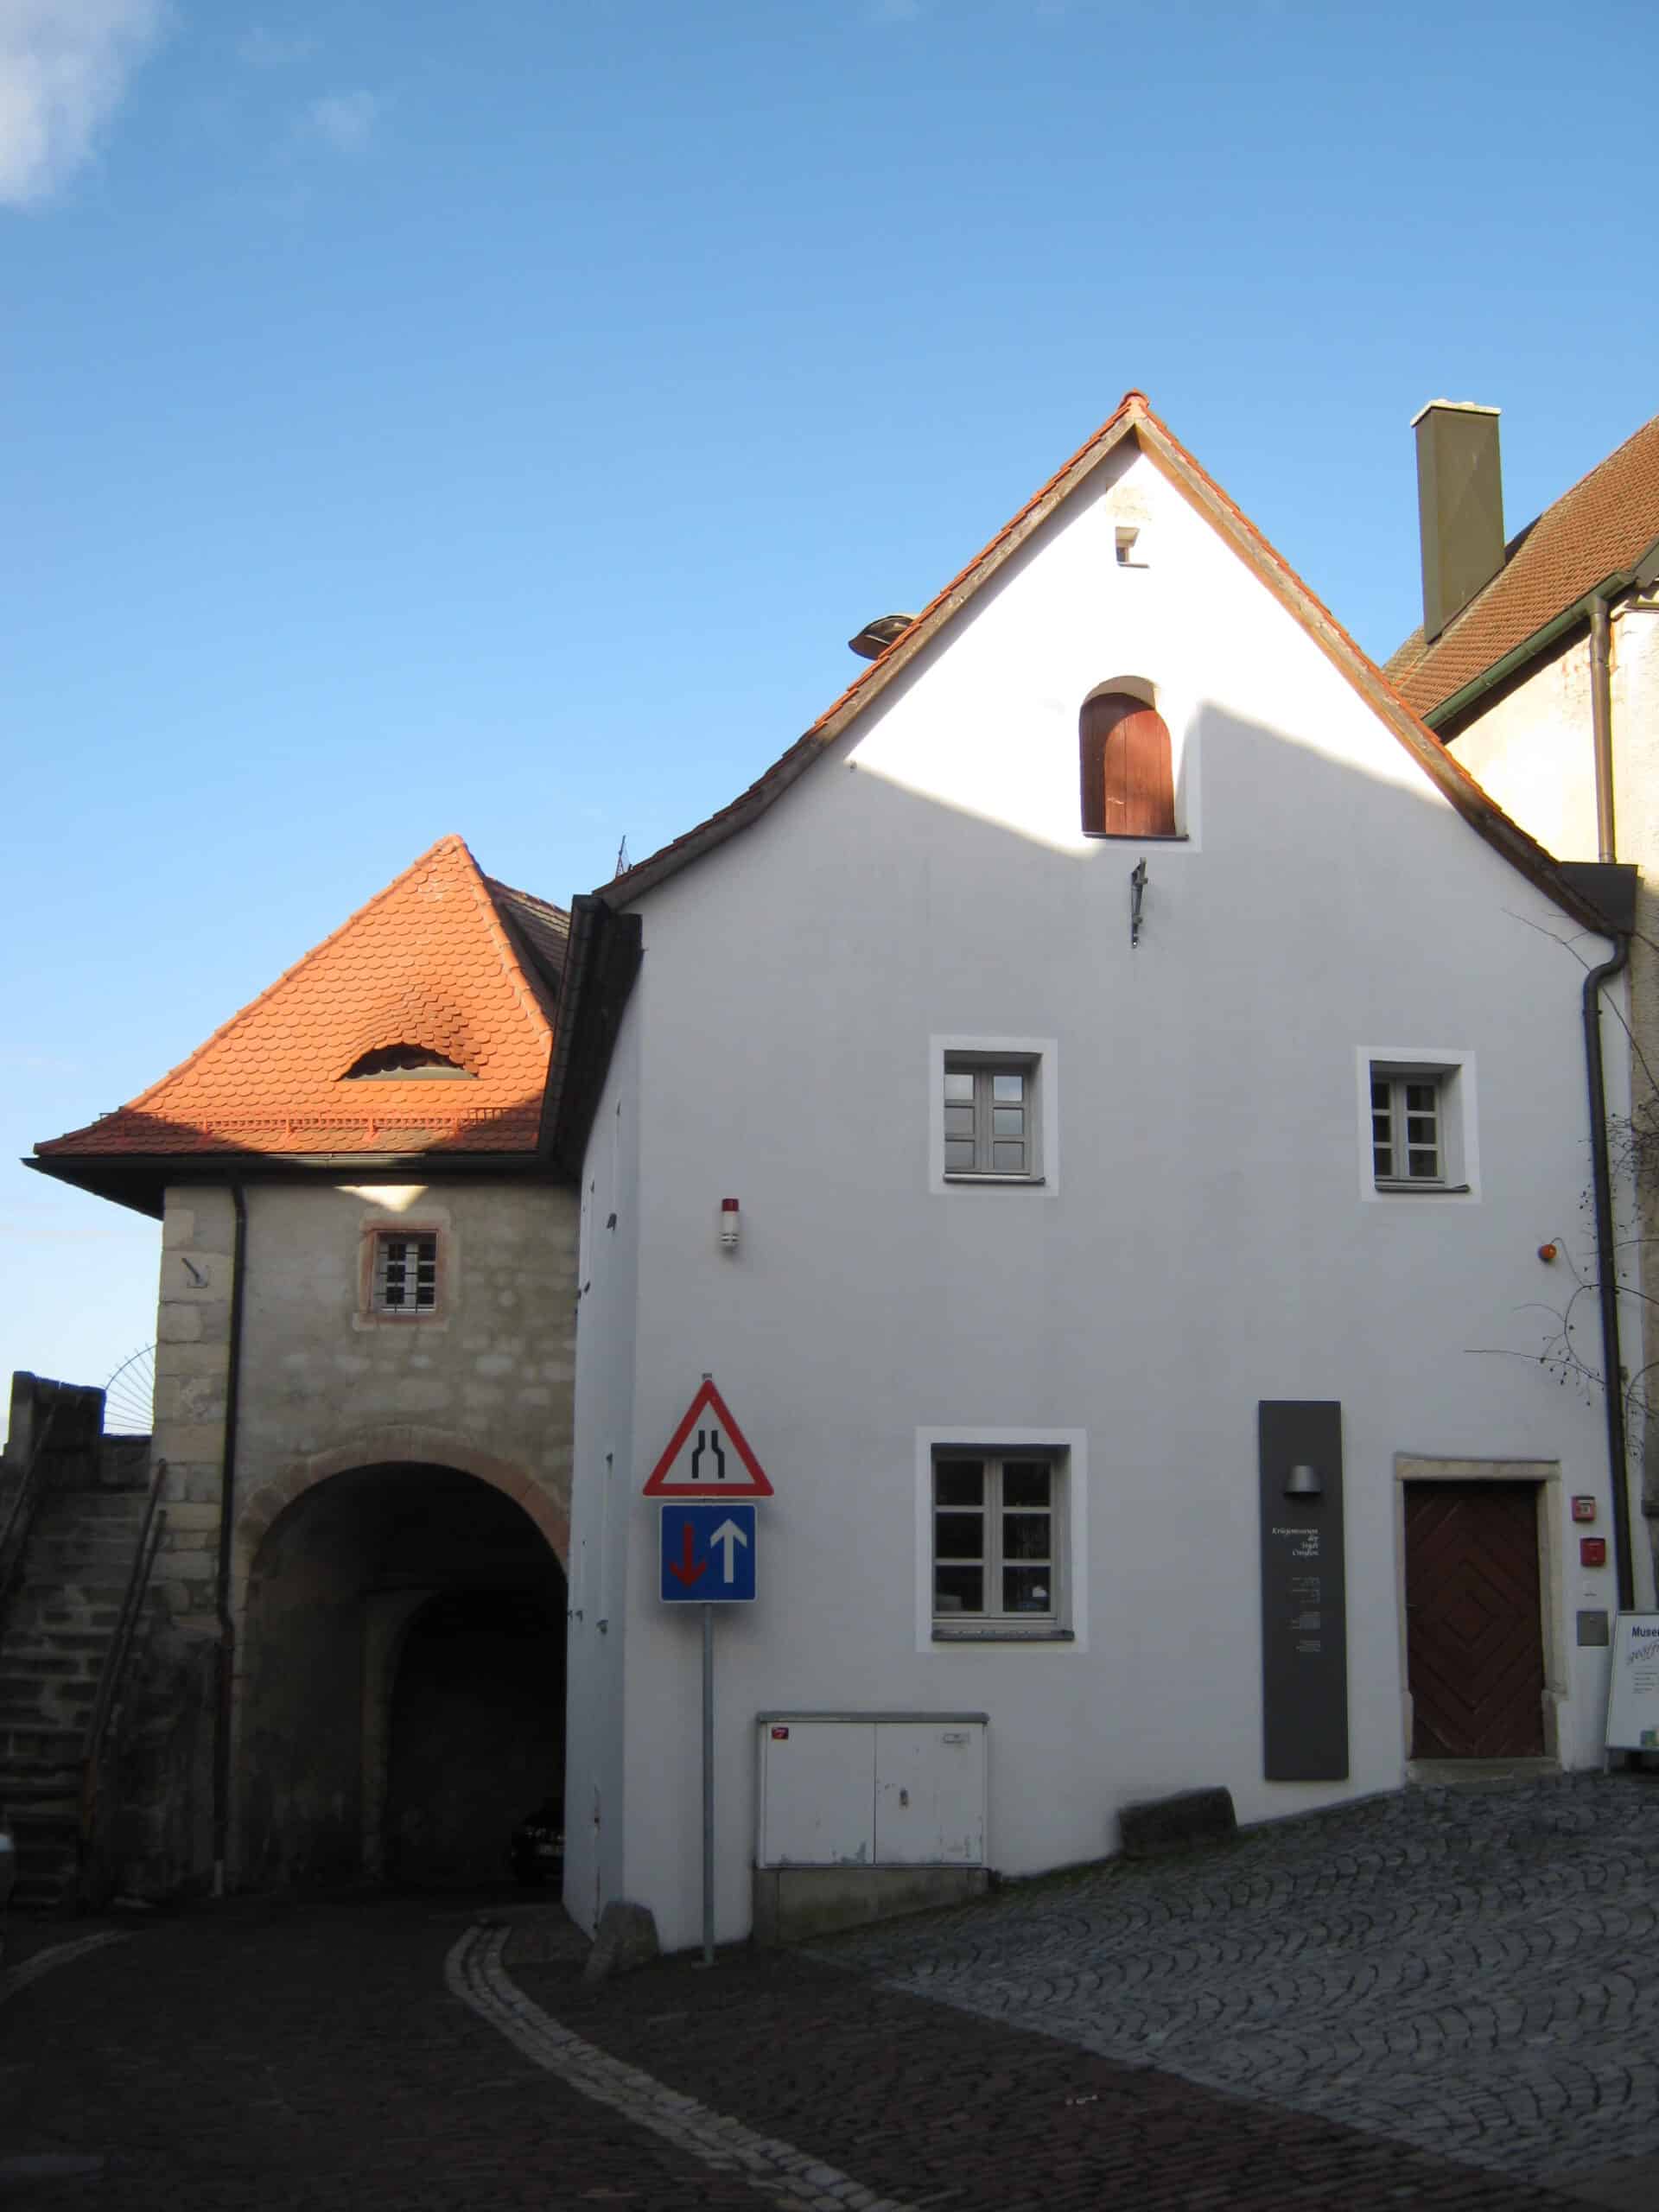 Krügemuseum